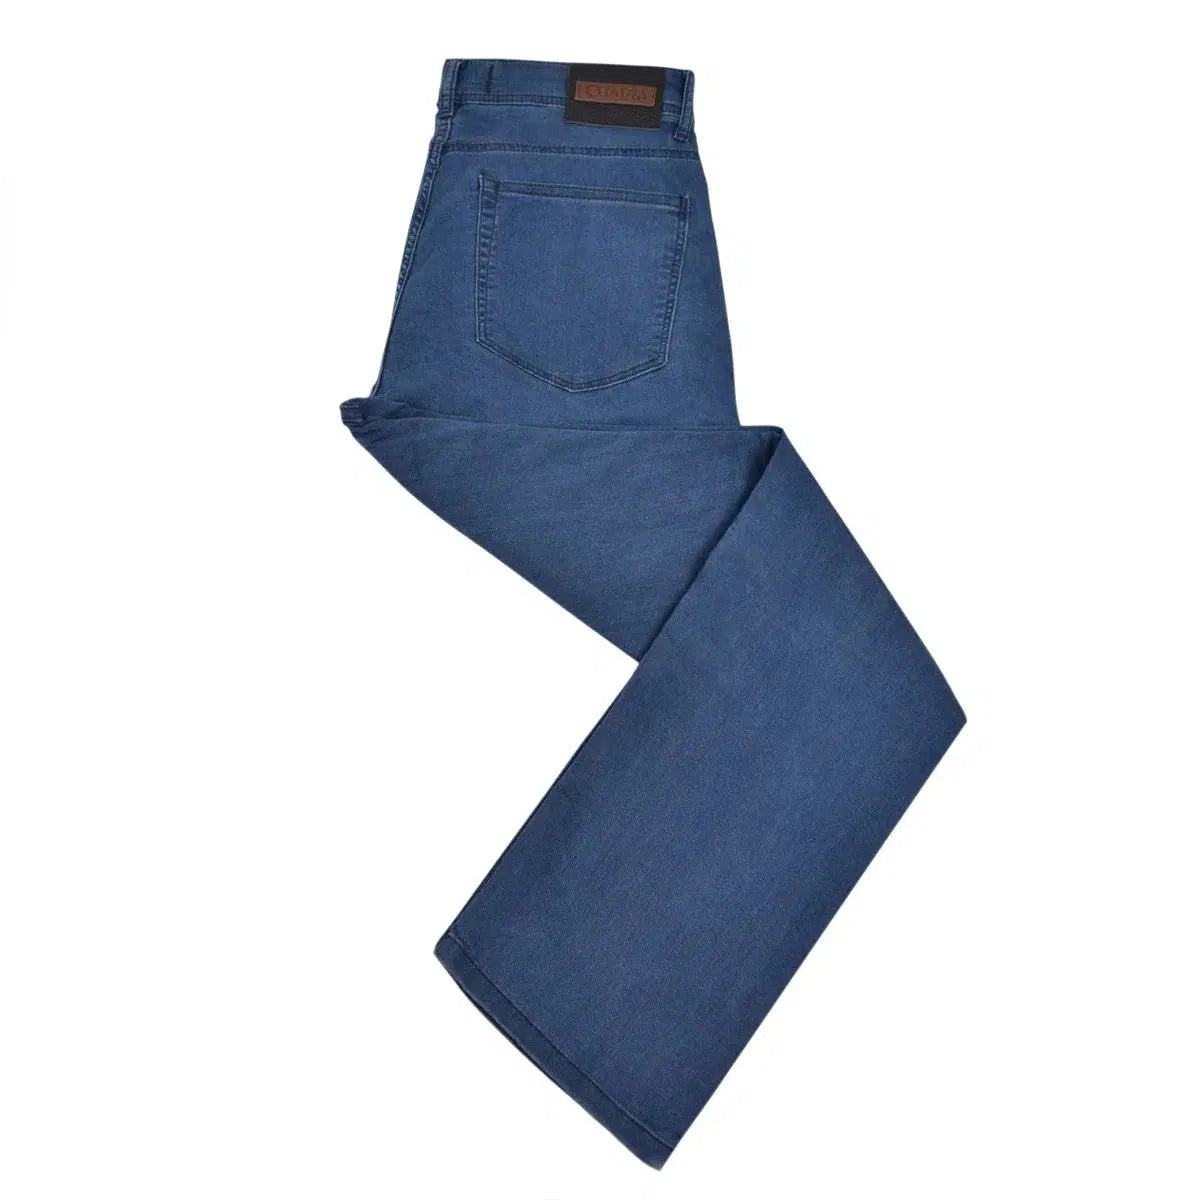 JN0LP10 - Cuadra denim blue ultimate comfort stretch denim jeans for men-Kuet.us